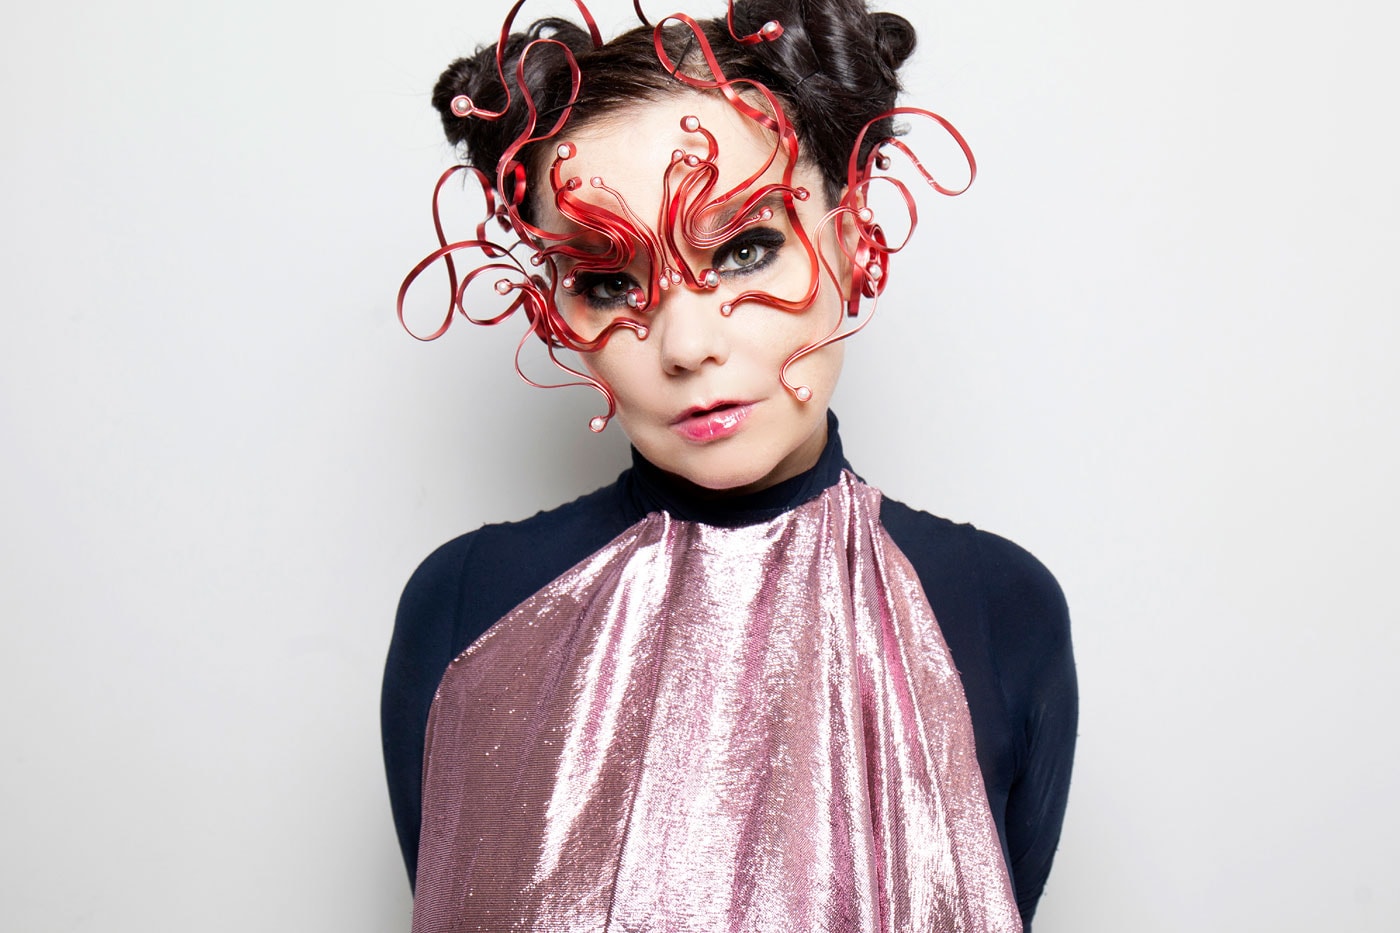 Björk Arca "Arisen My Senses" Video Jesse kanda Utopia Iceland